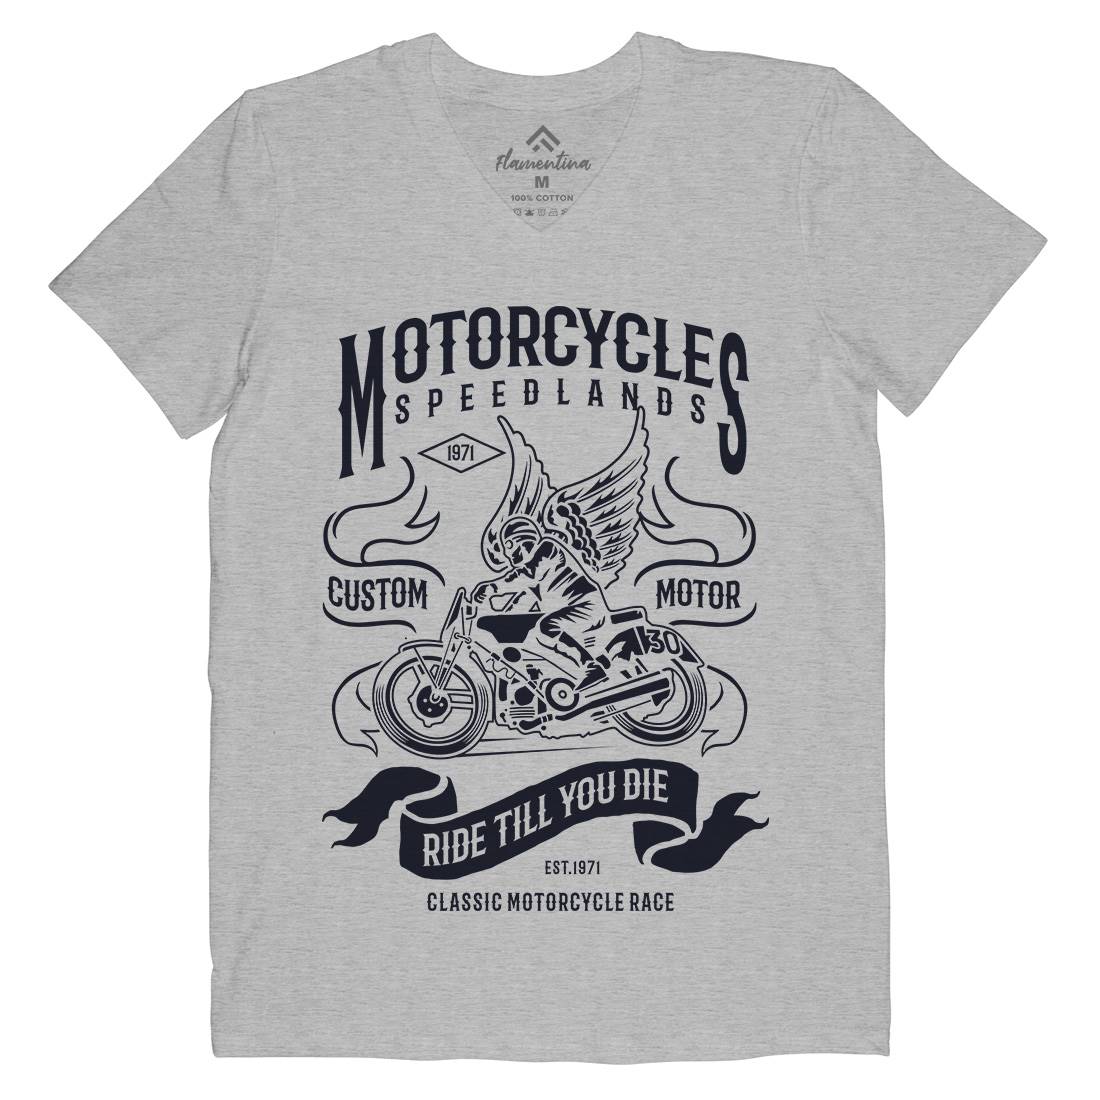 Speed Lands Mens Organic V-Neck T-Shirt Motorcycles B232